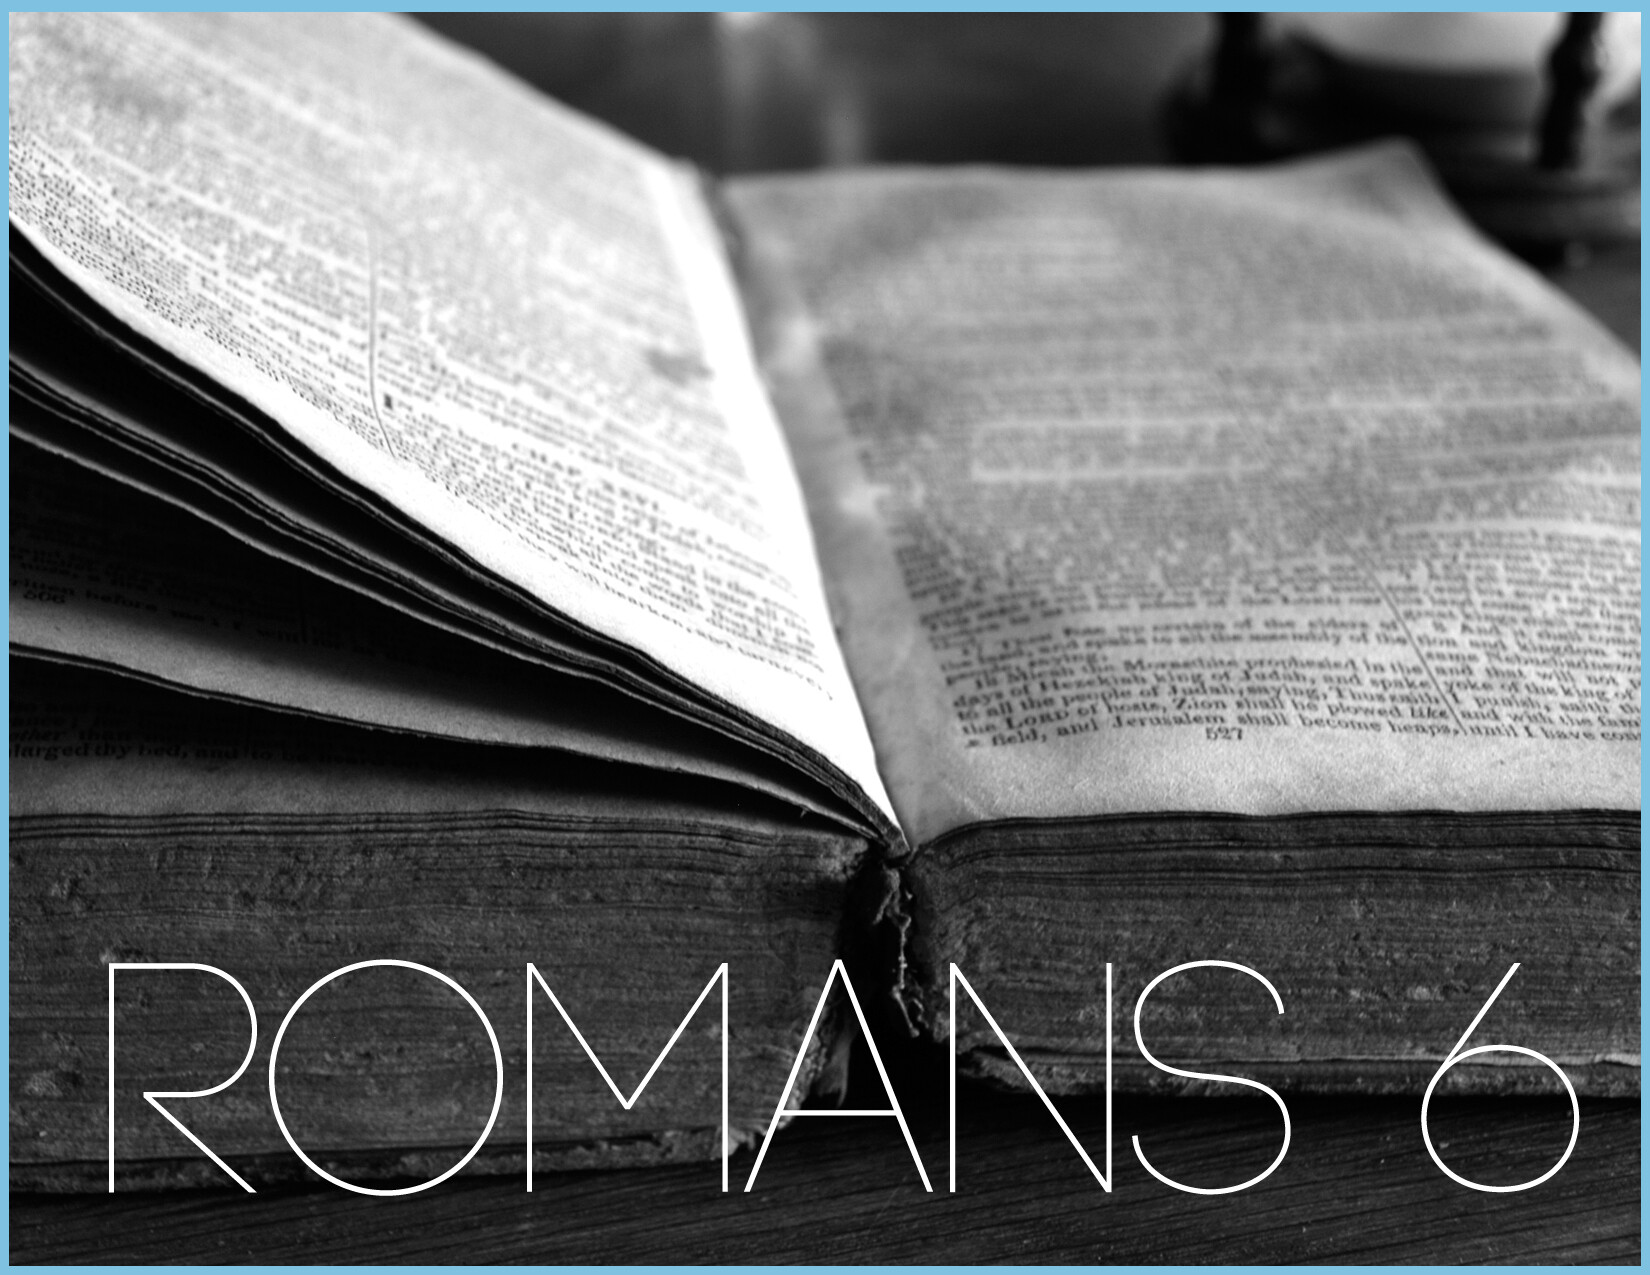 Romans 6